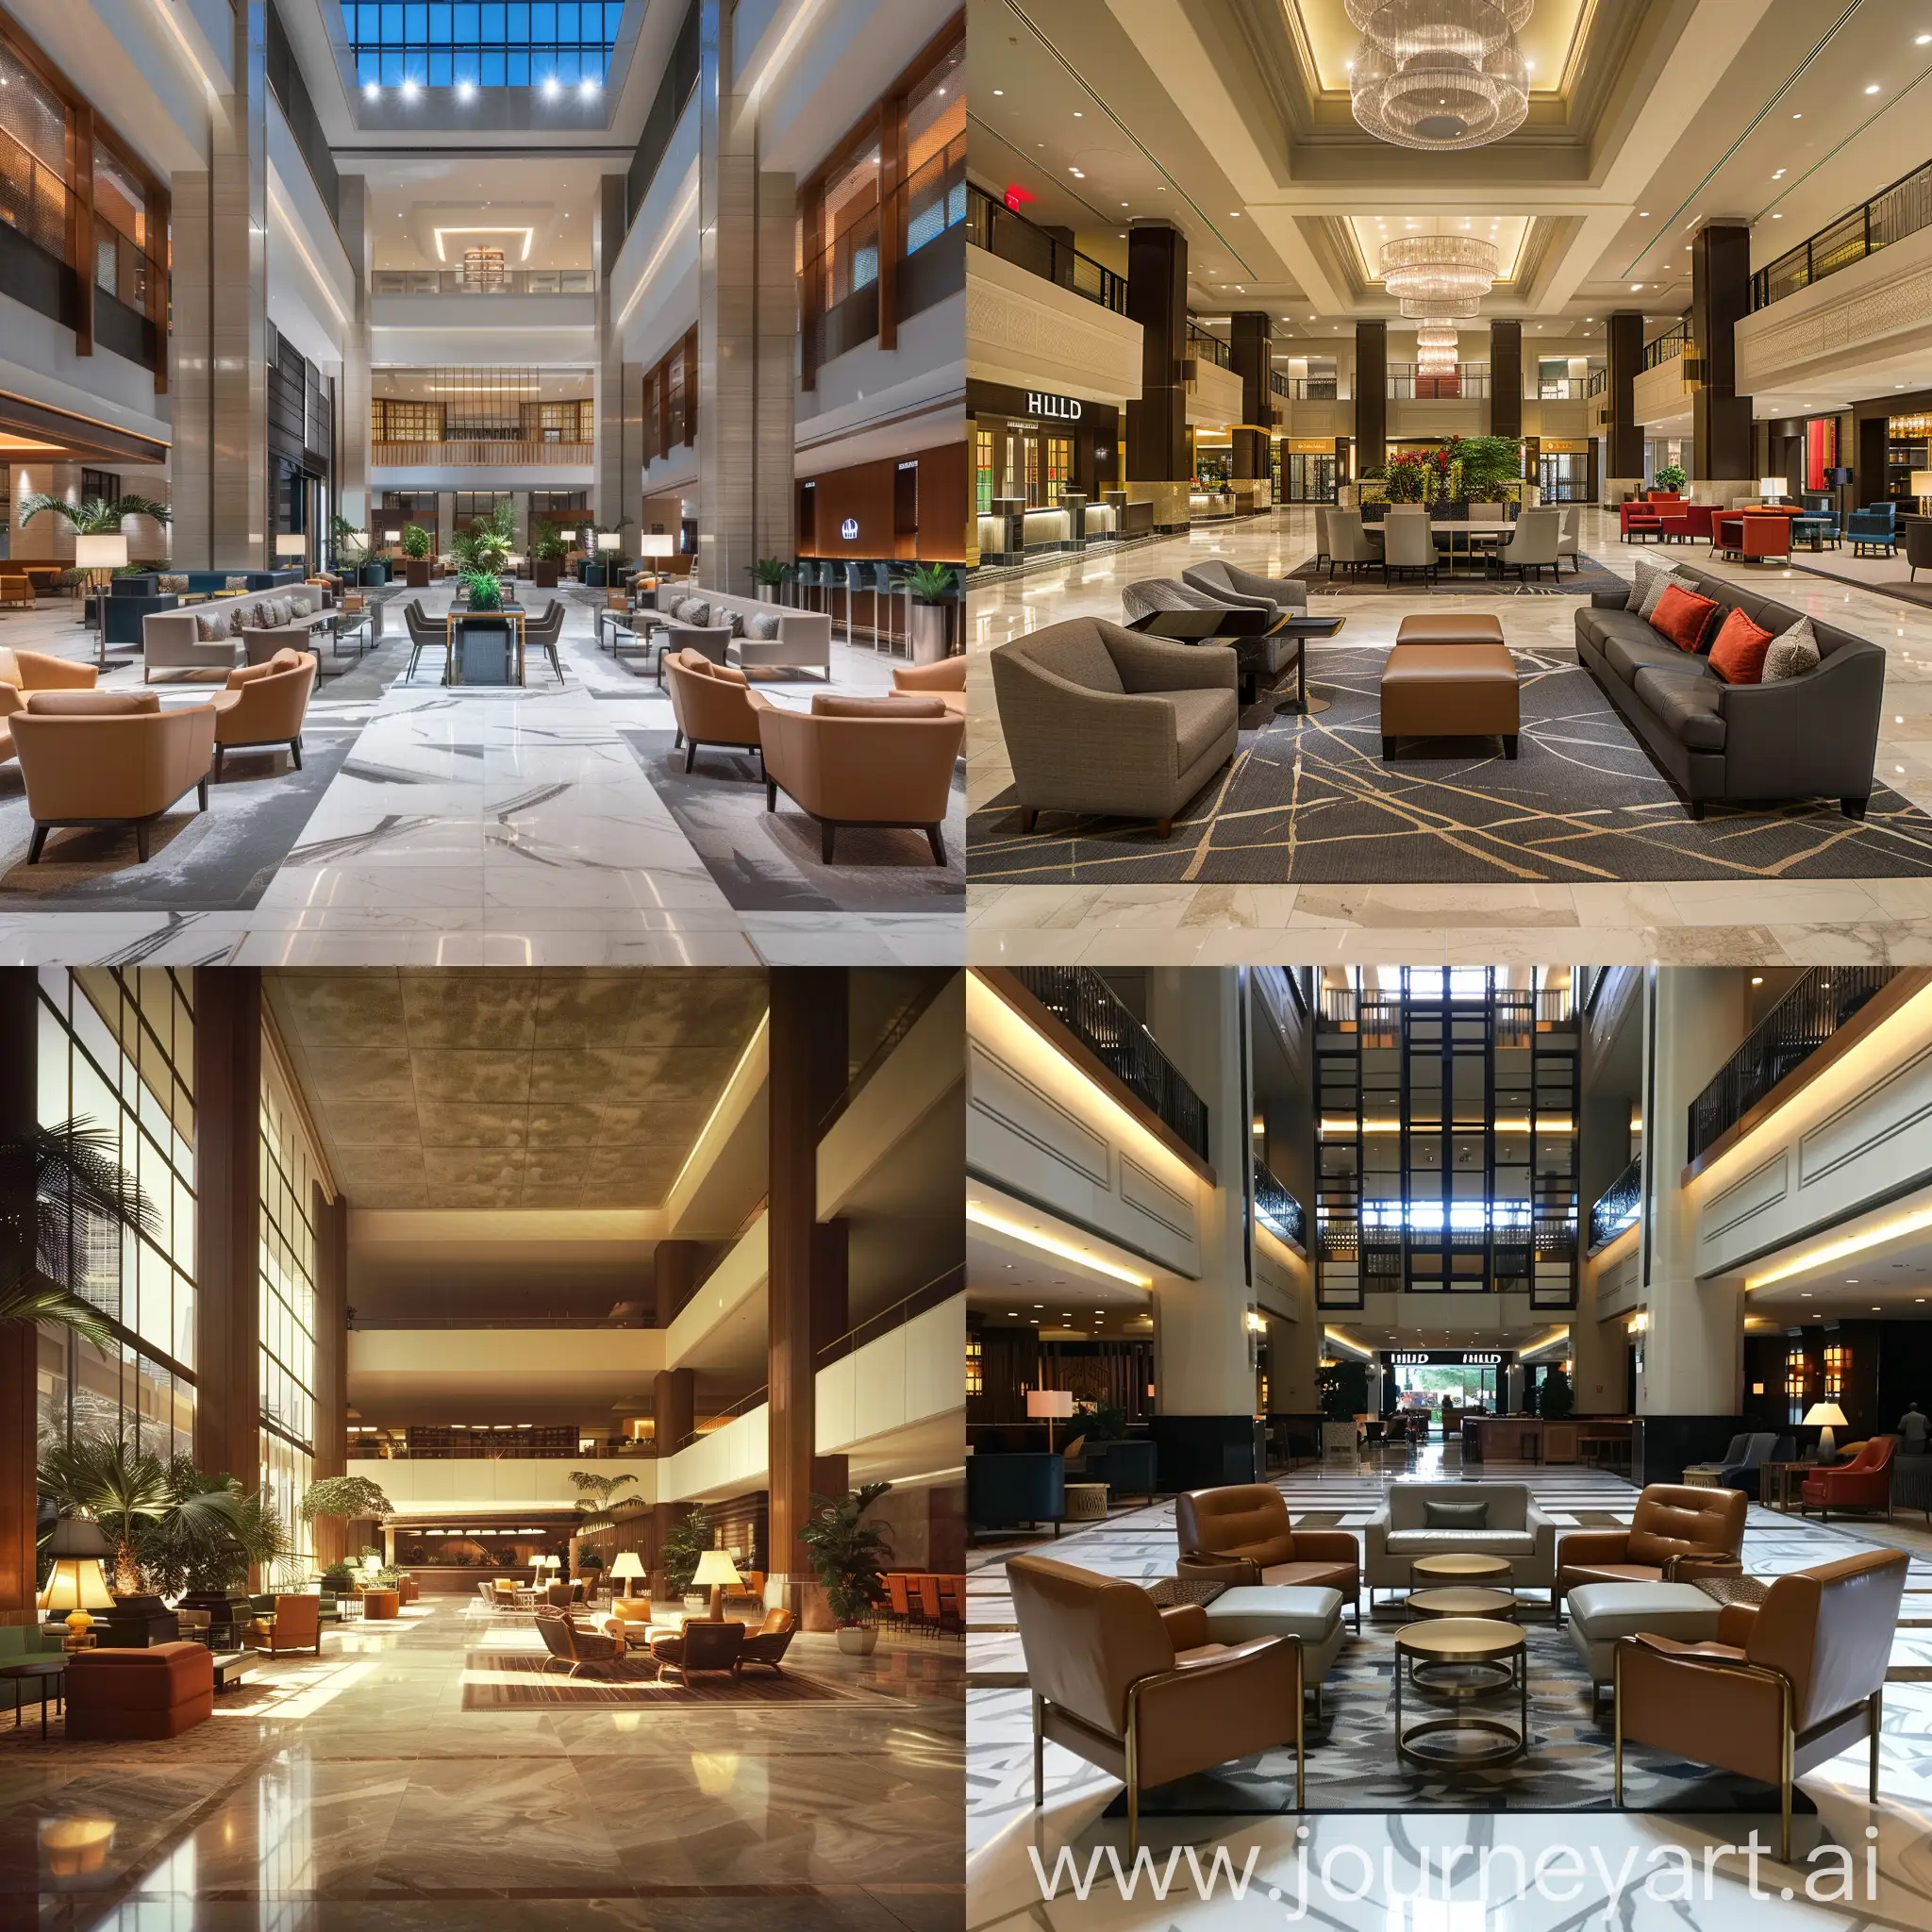 Luxurious-Hilton-Hotel-Lobby-Interior-with-Elegant-Decor